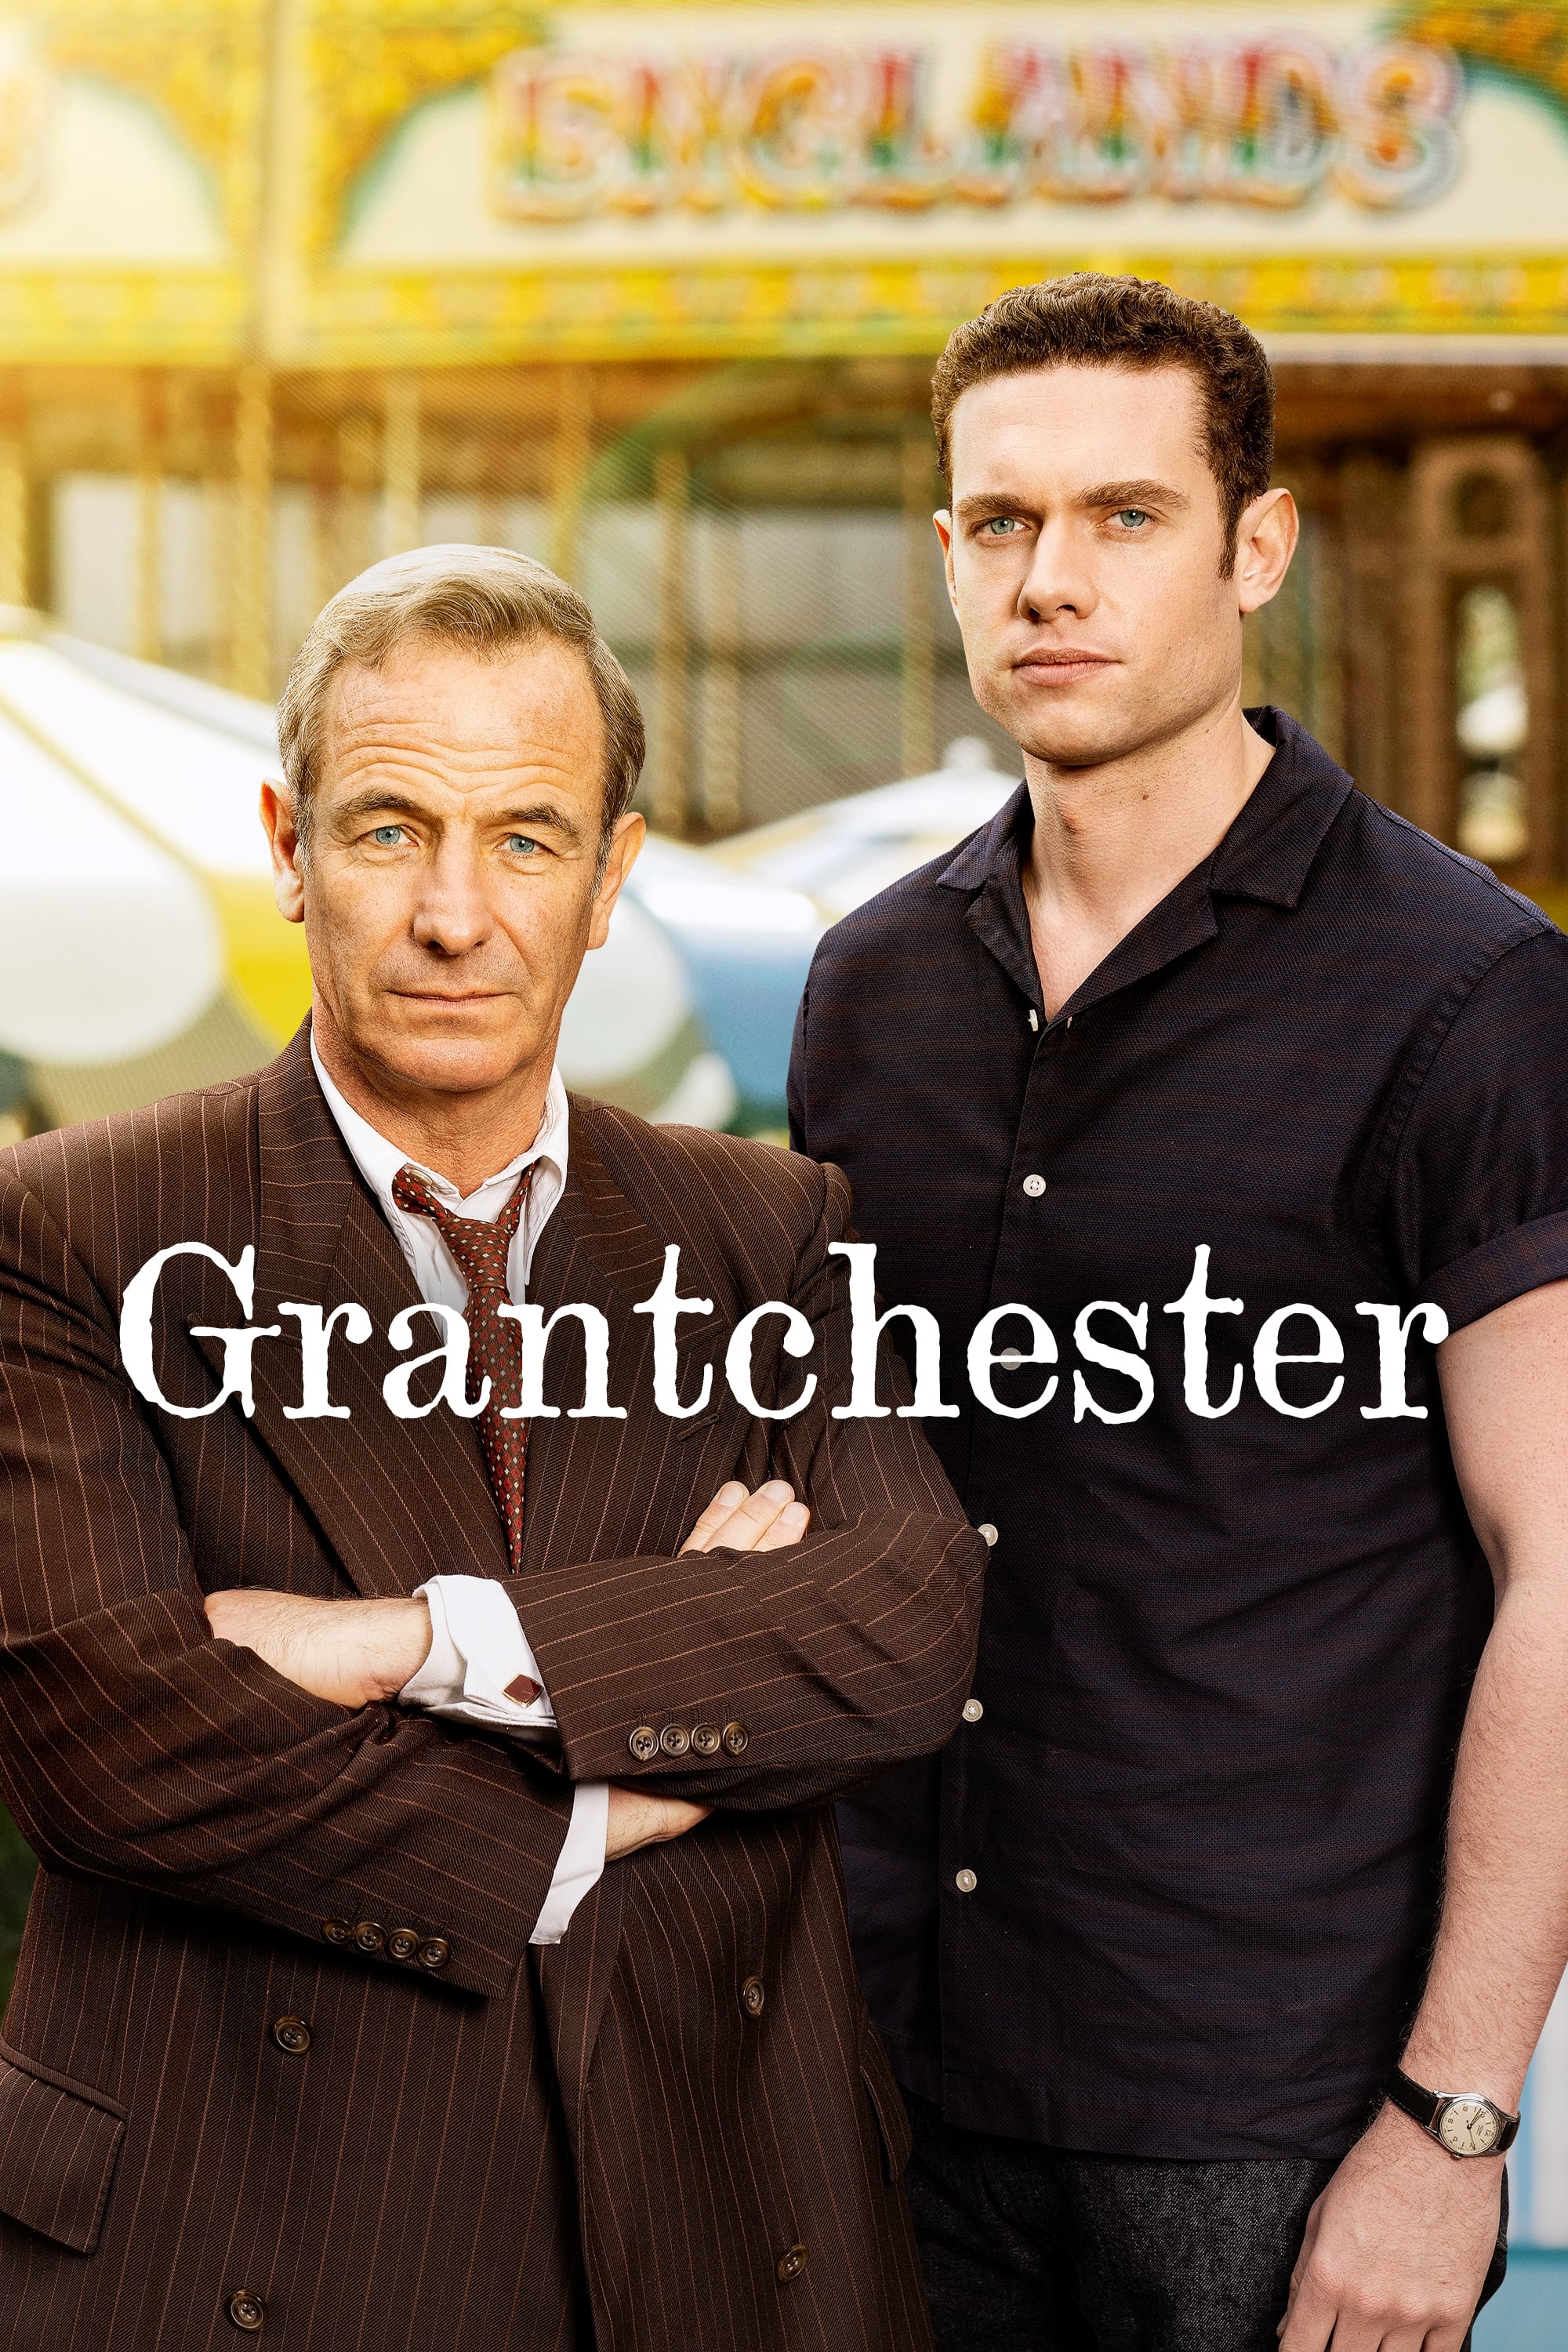 Grantchester TV Shows About Criminal Investigation